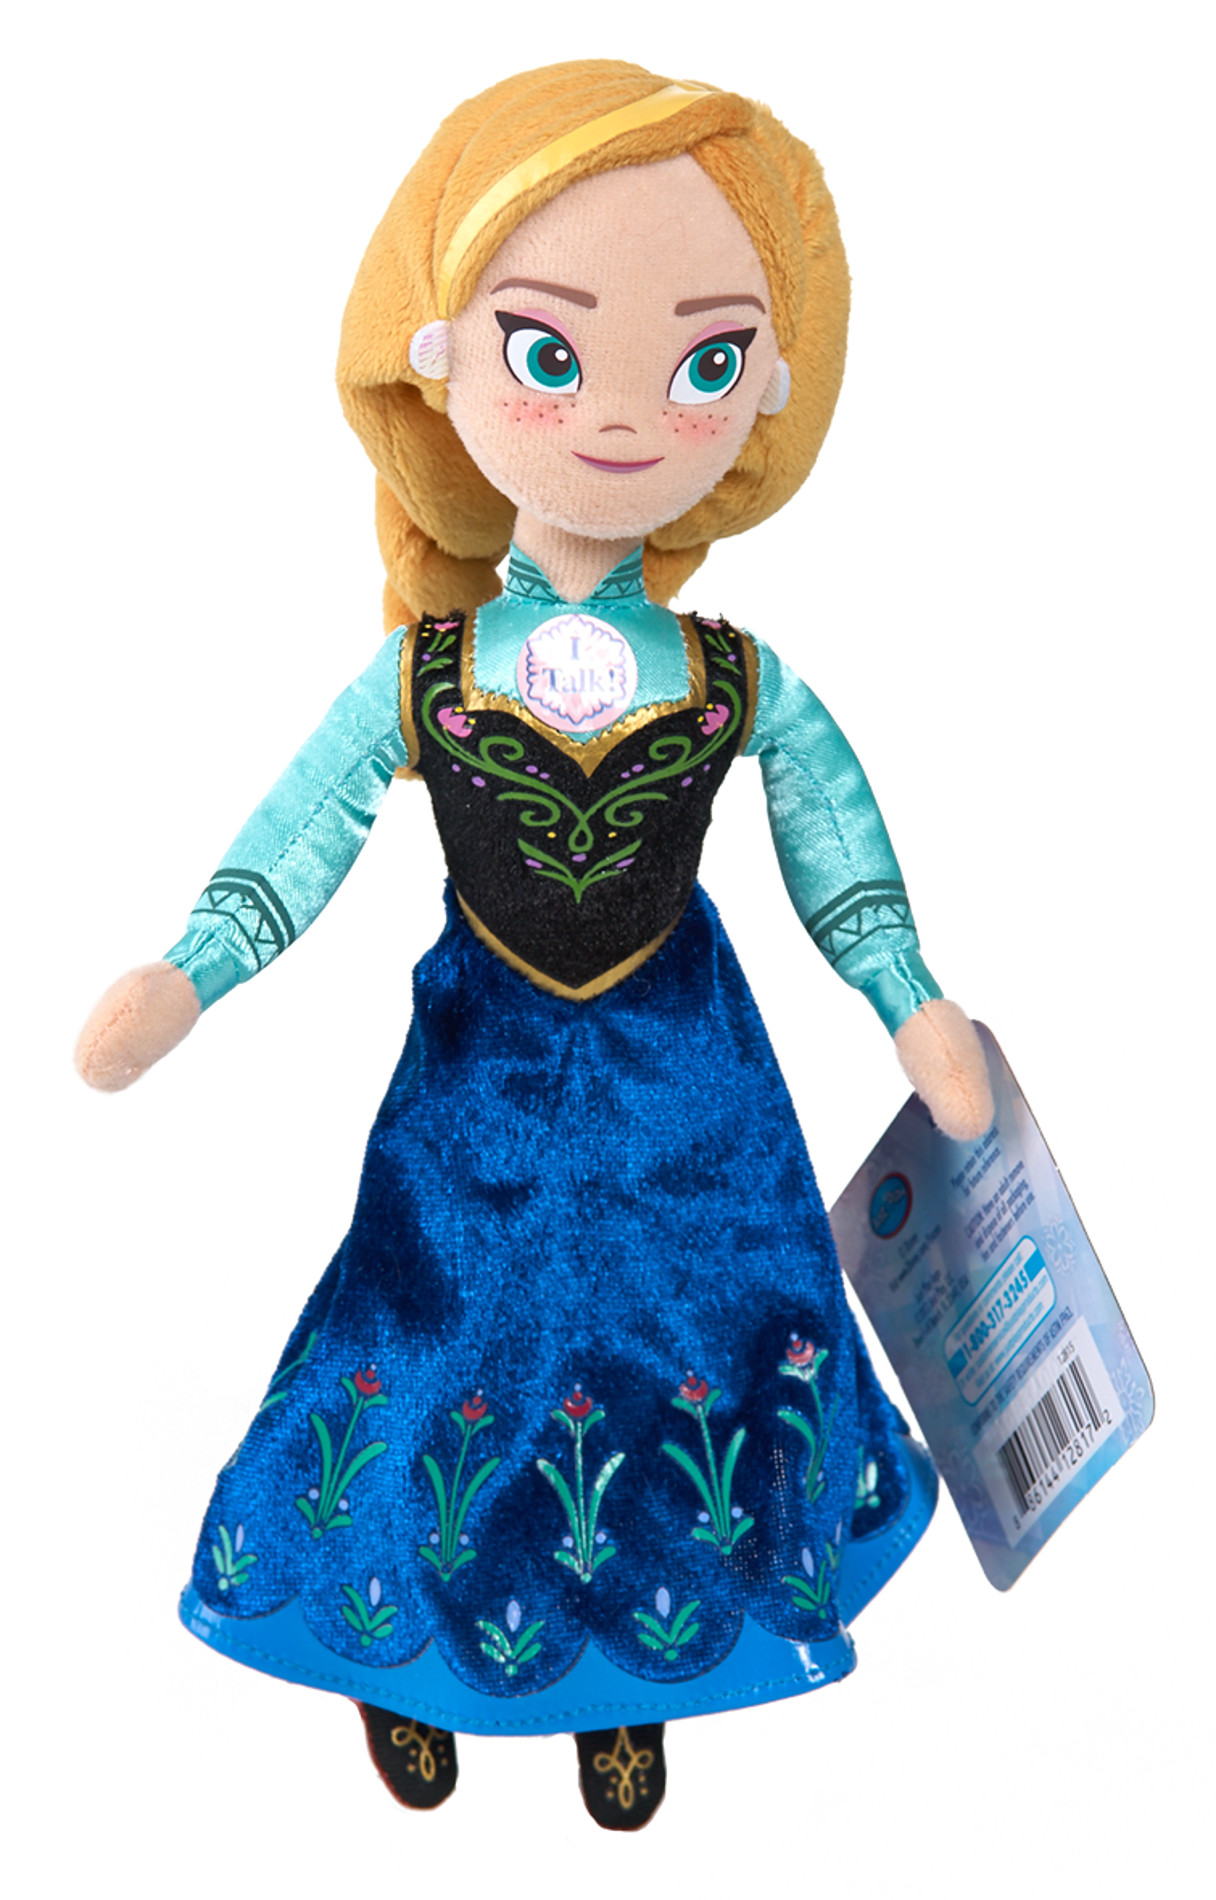 Disney 10 Talking Plush   Disney Frozen Anna   Toys & Games   Stuffed